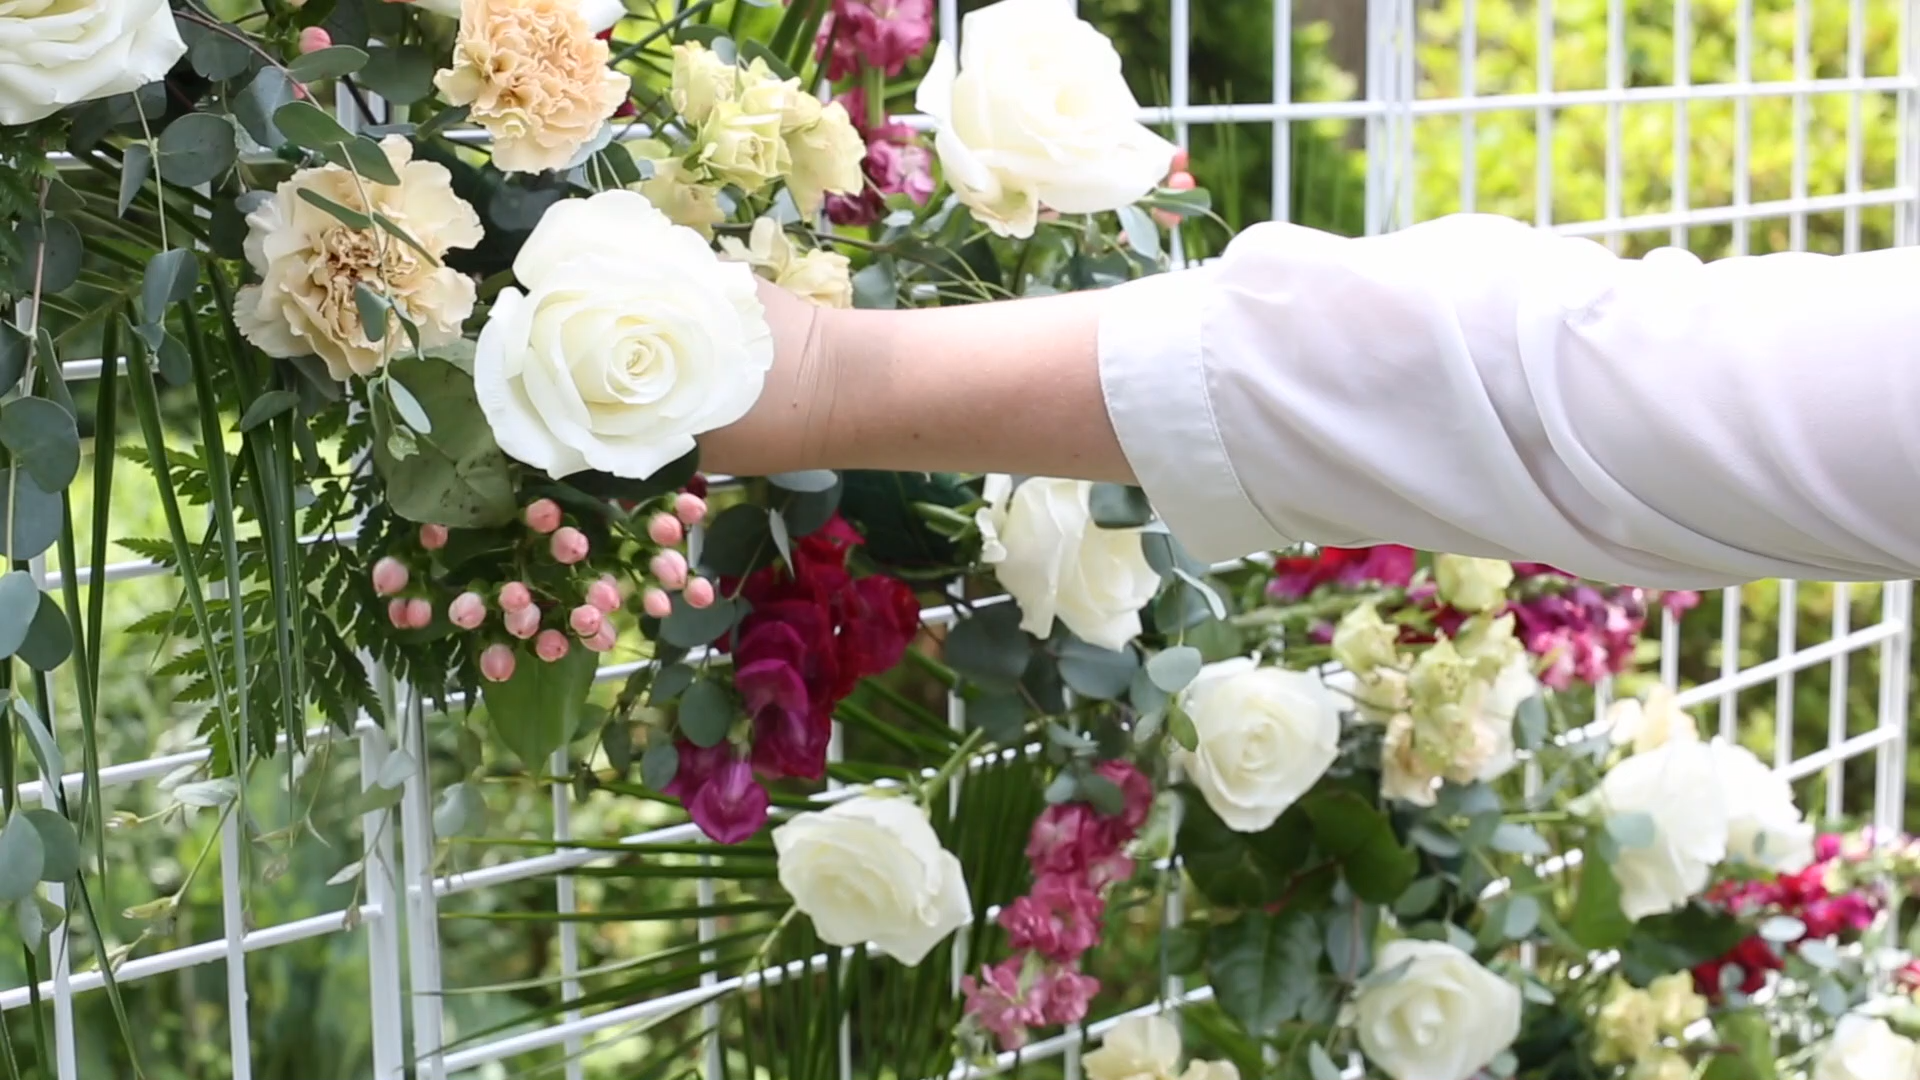 DIY Ceremony Flowers -   19 diy Wedding backdrop ideas